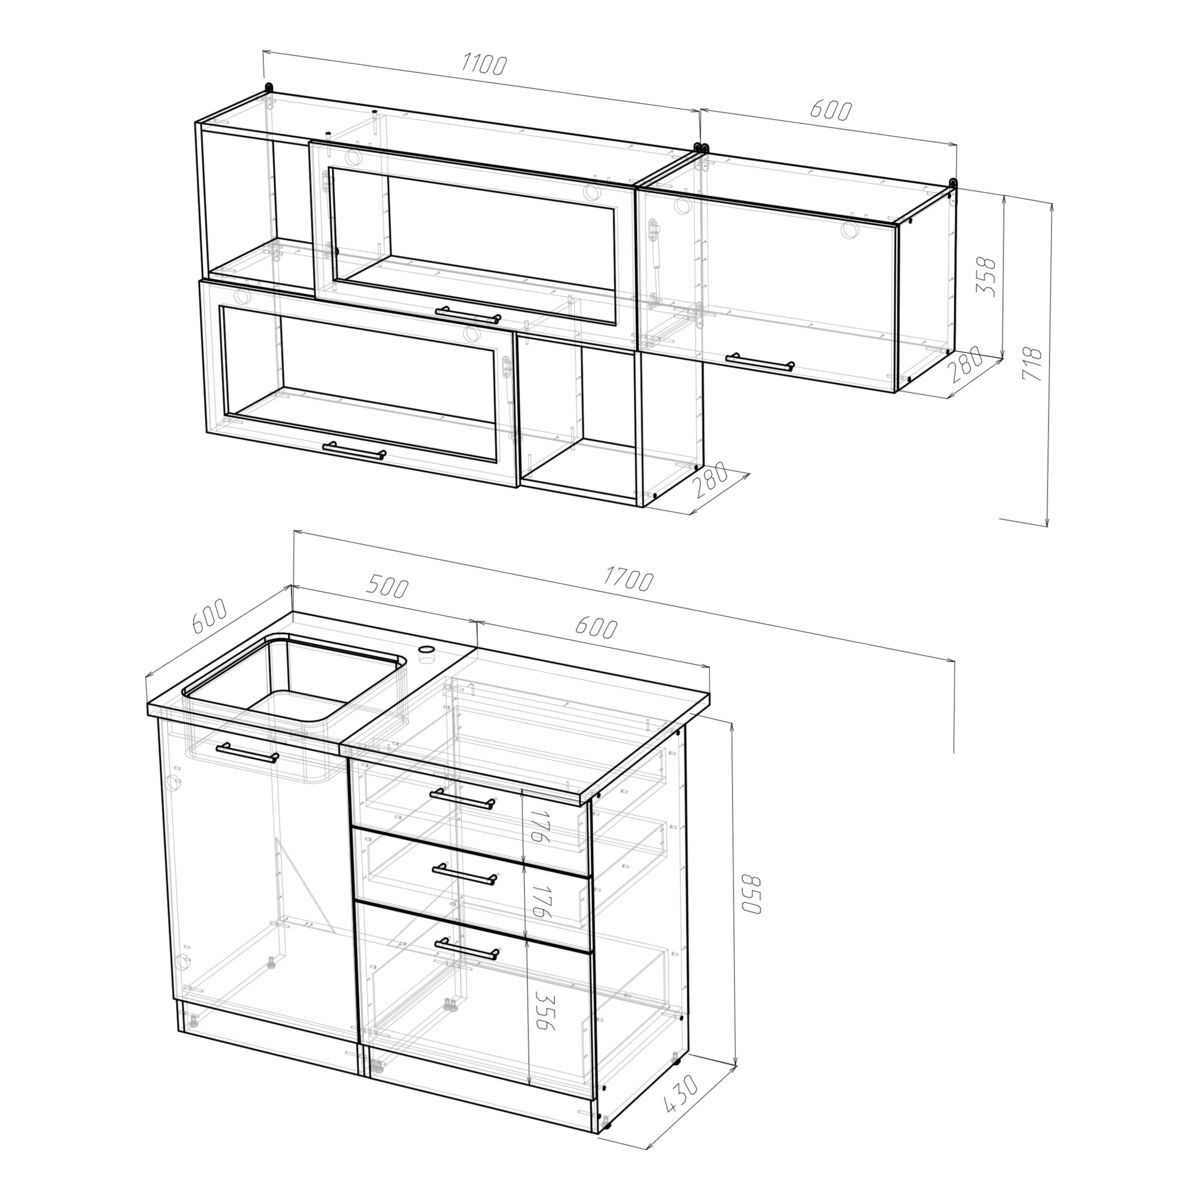 стандартные размеры навесных кухонных шкафов